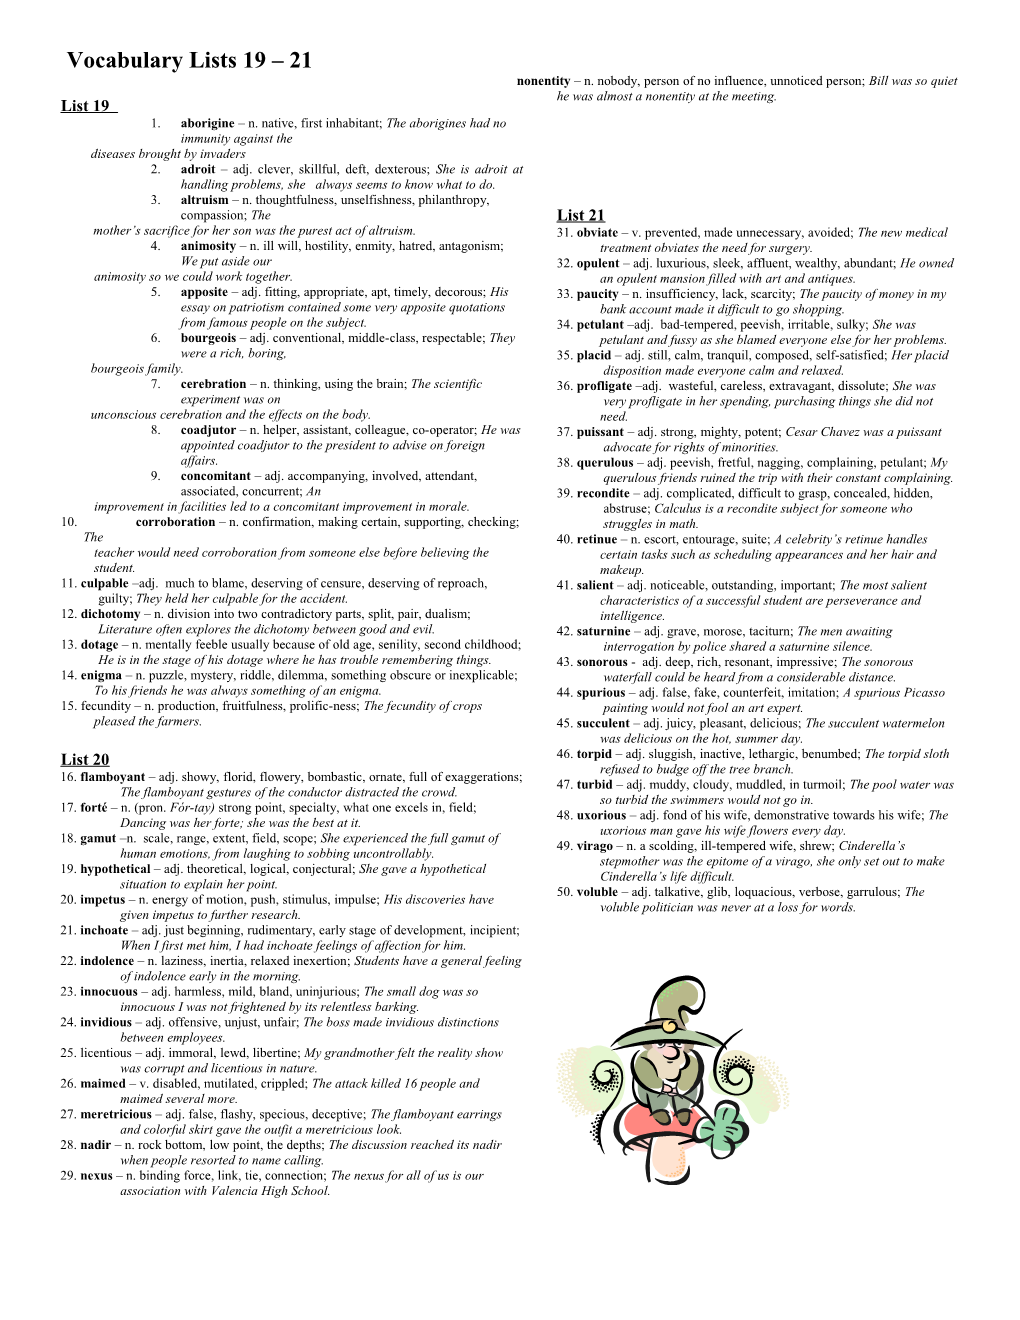 Vocabulary Lists 19 21